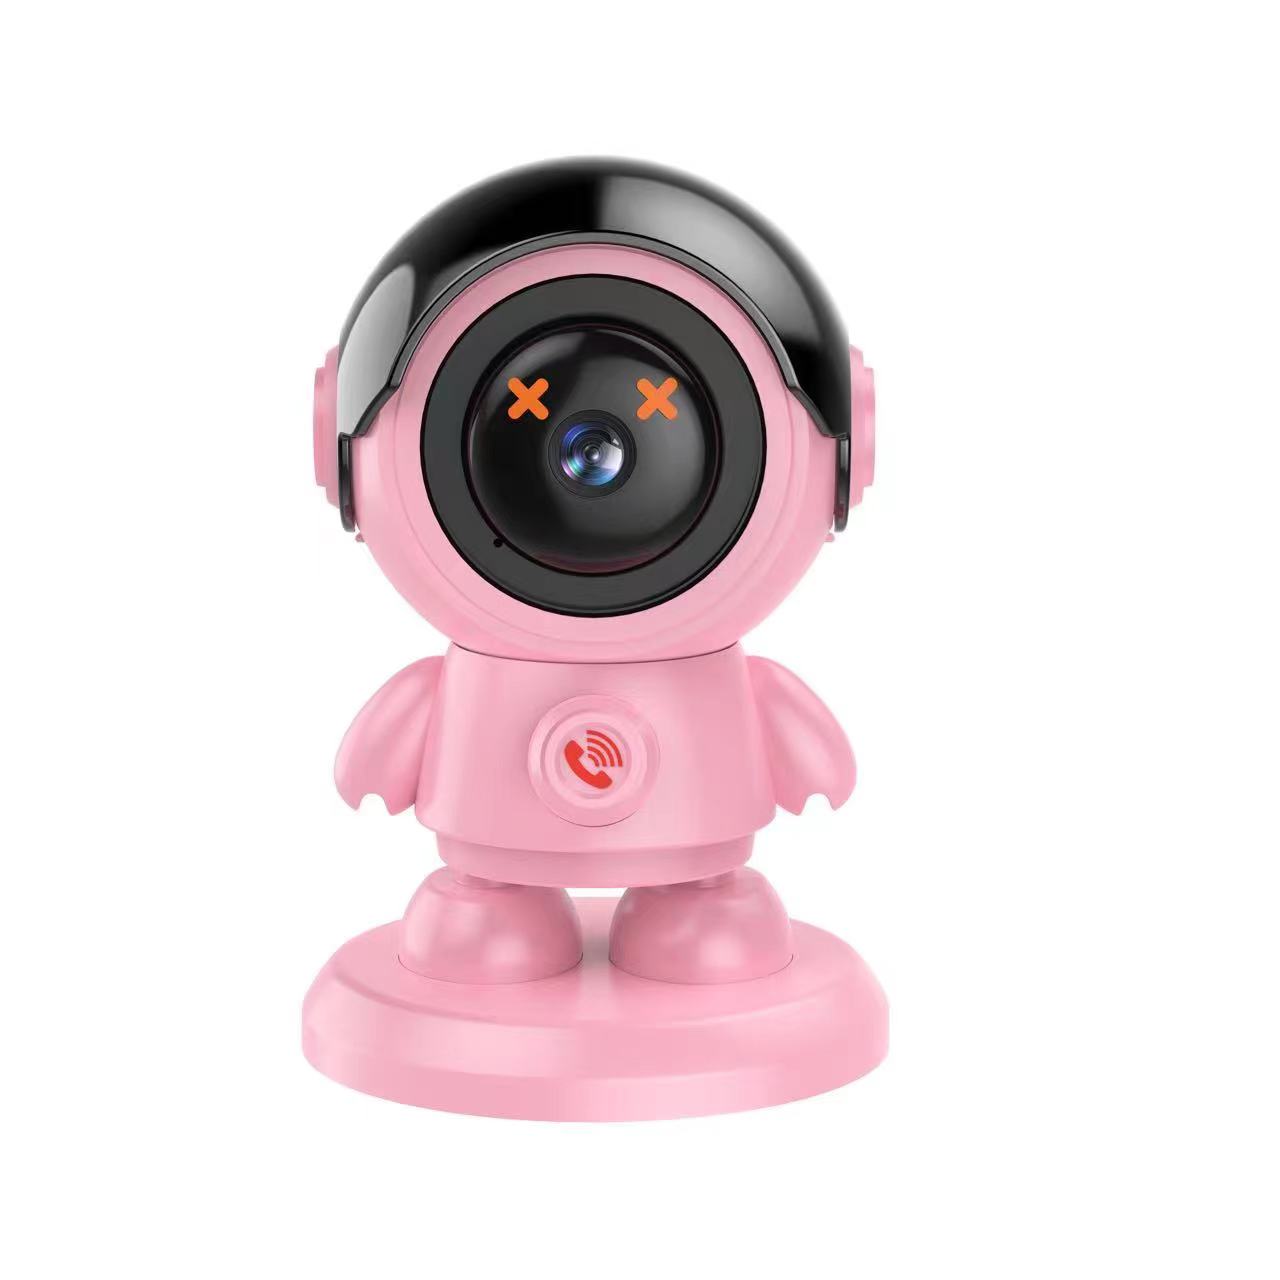 WIFI Surveillance Camera Robot Wireless Network Home Smart Remote HD Camera 